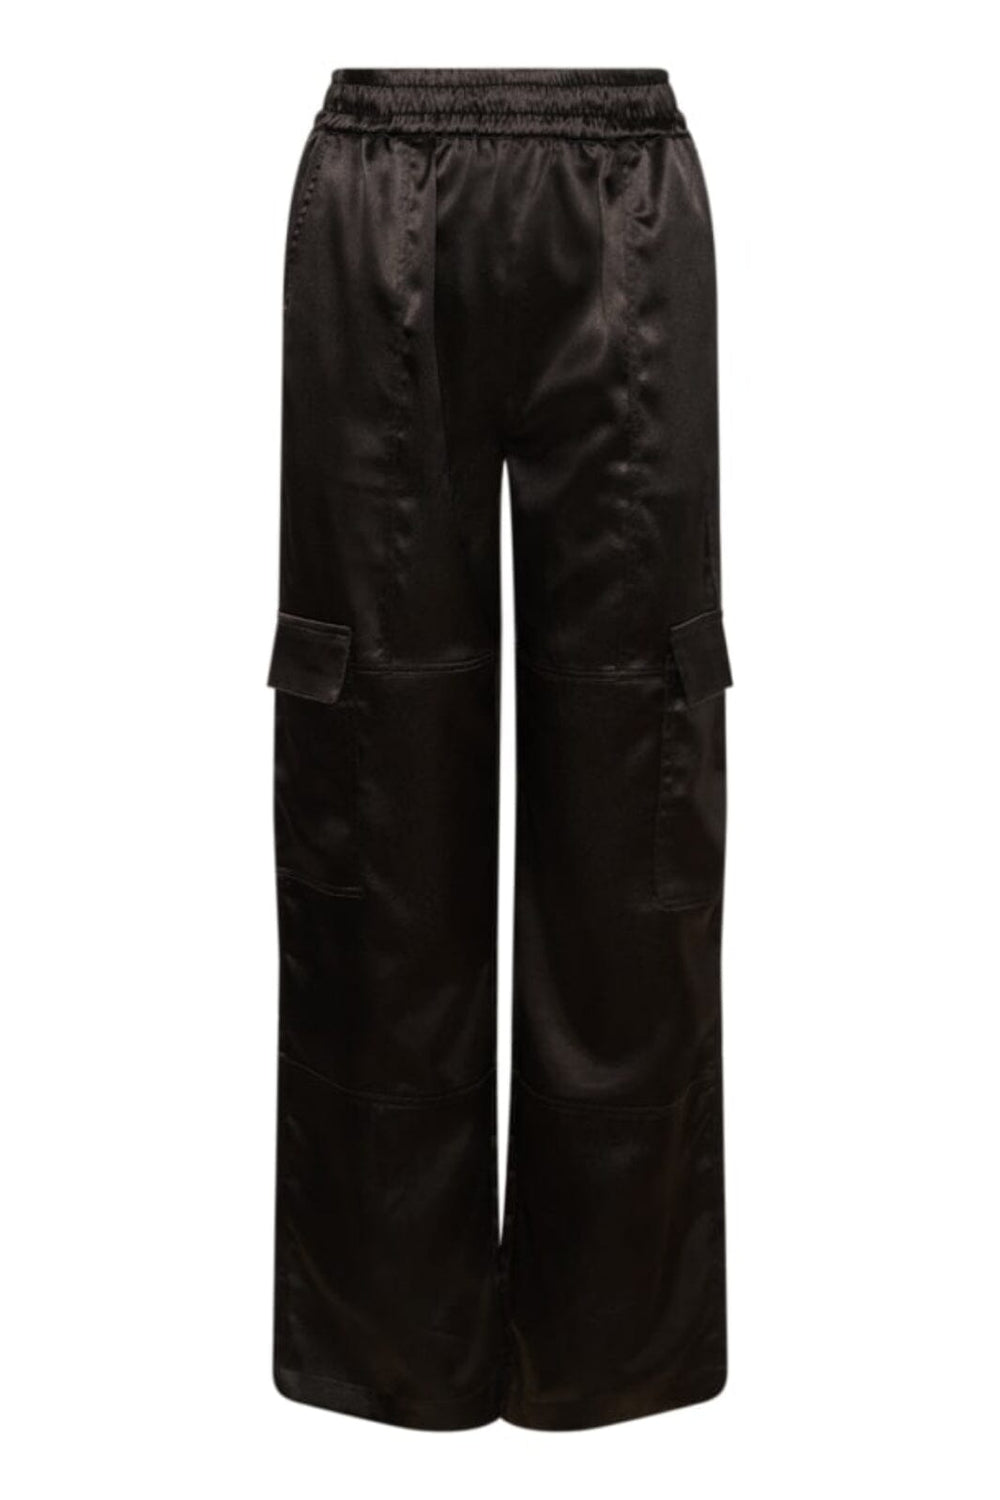 Noella - Utah Pants - 004 Black Bukser 